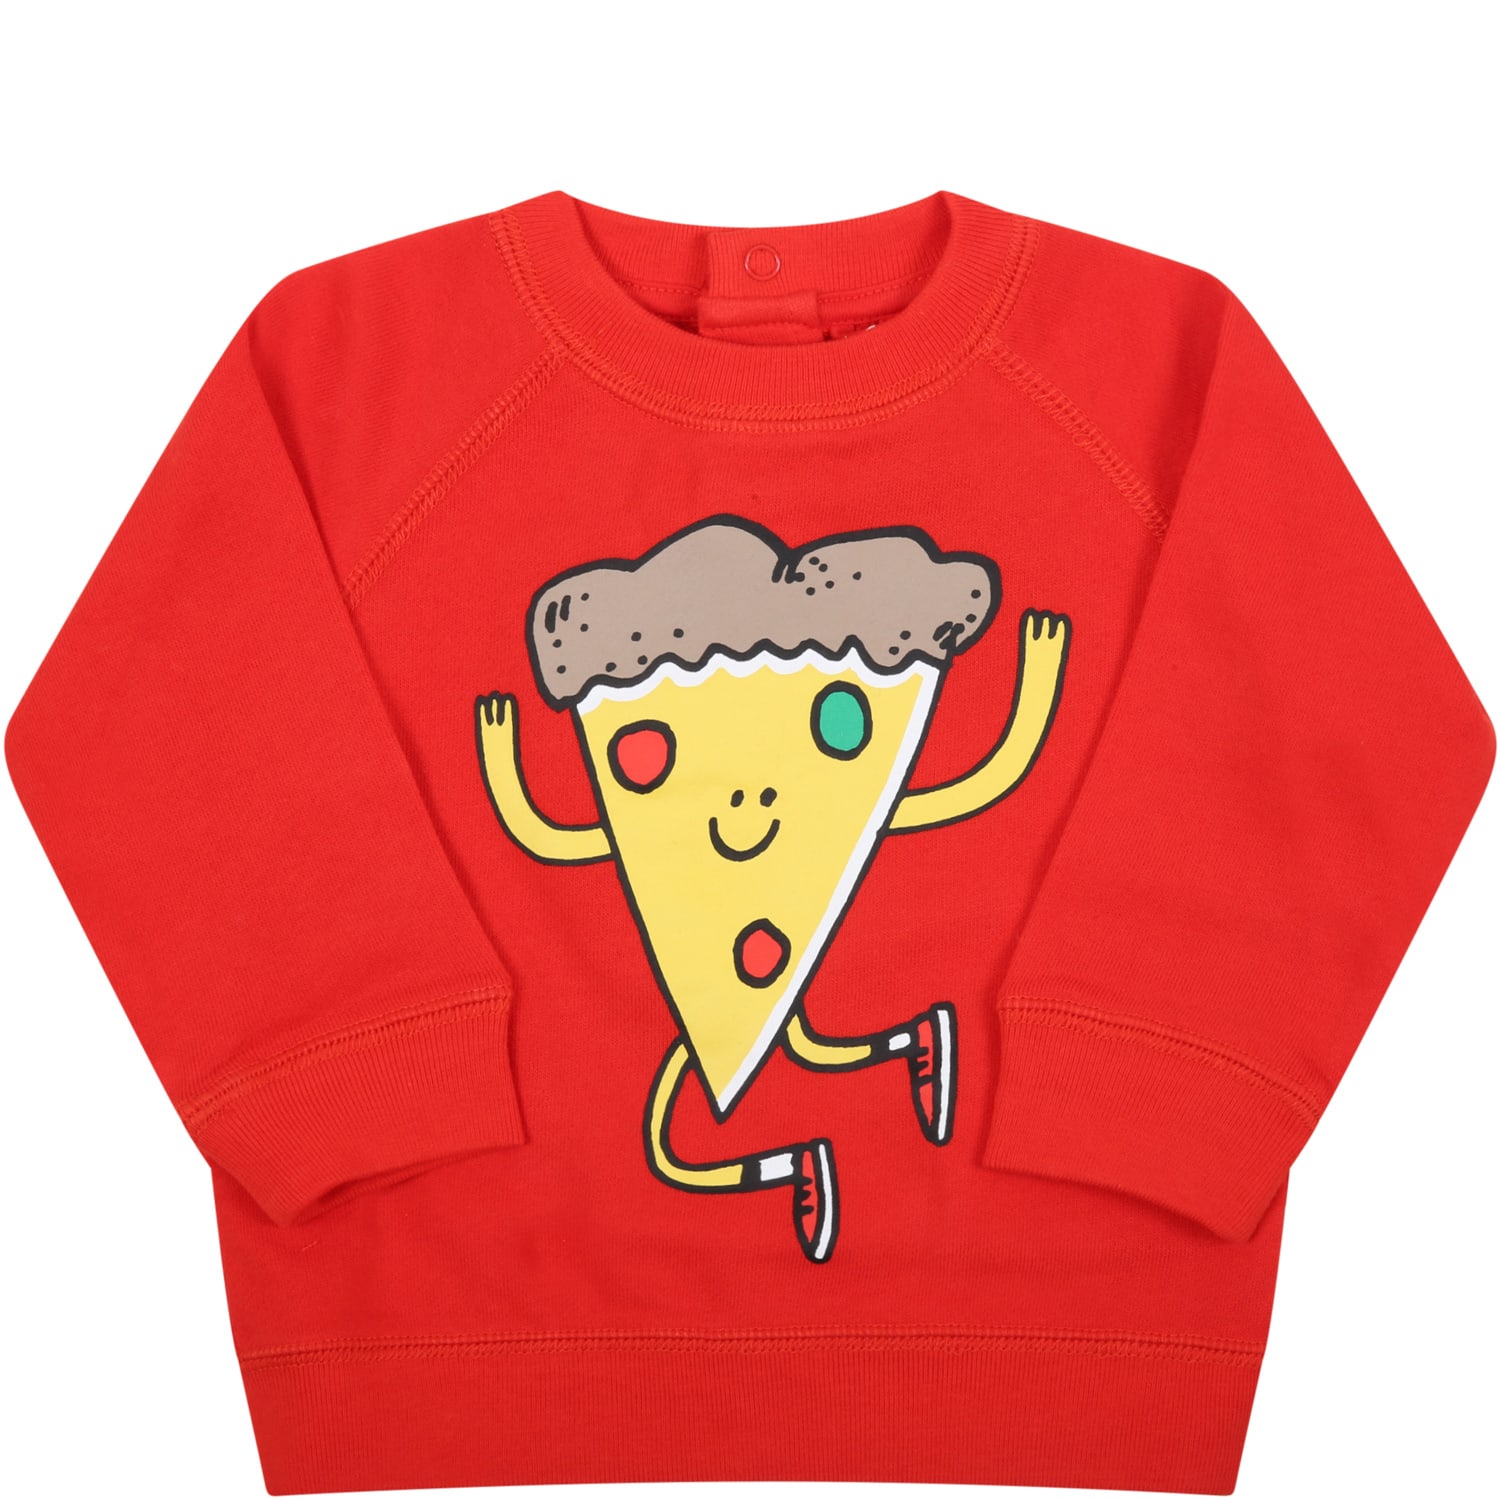 Stella McCartney Kids Red Sweatshirt For Baby Kids With Pizza